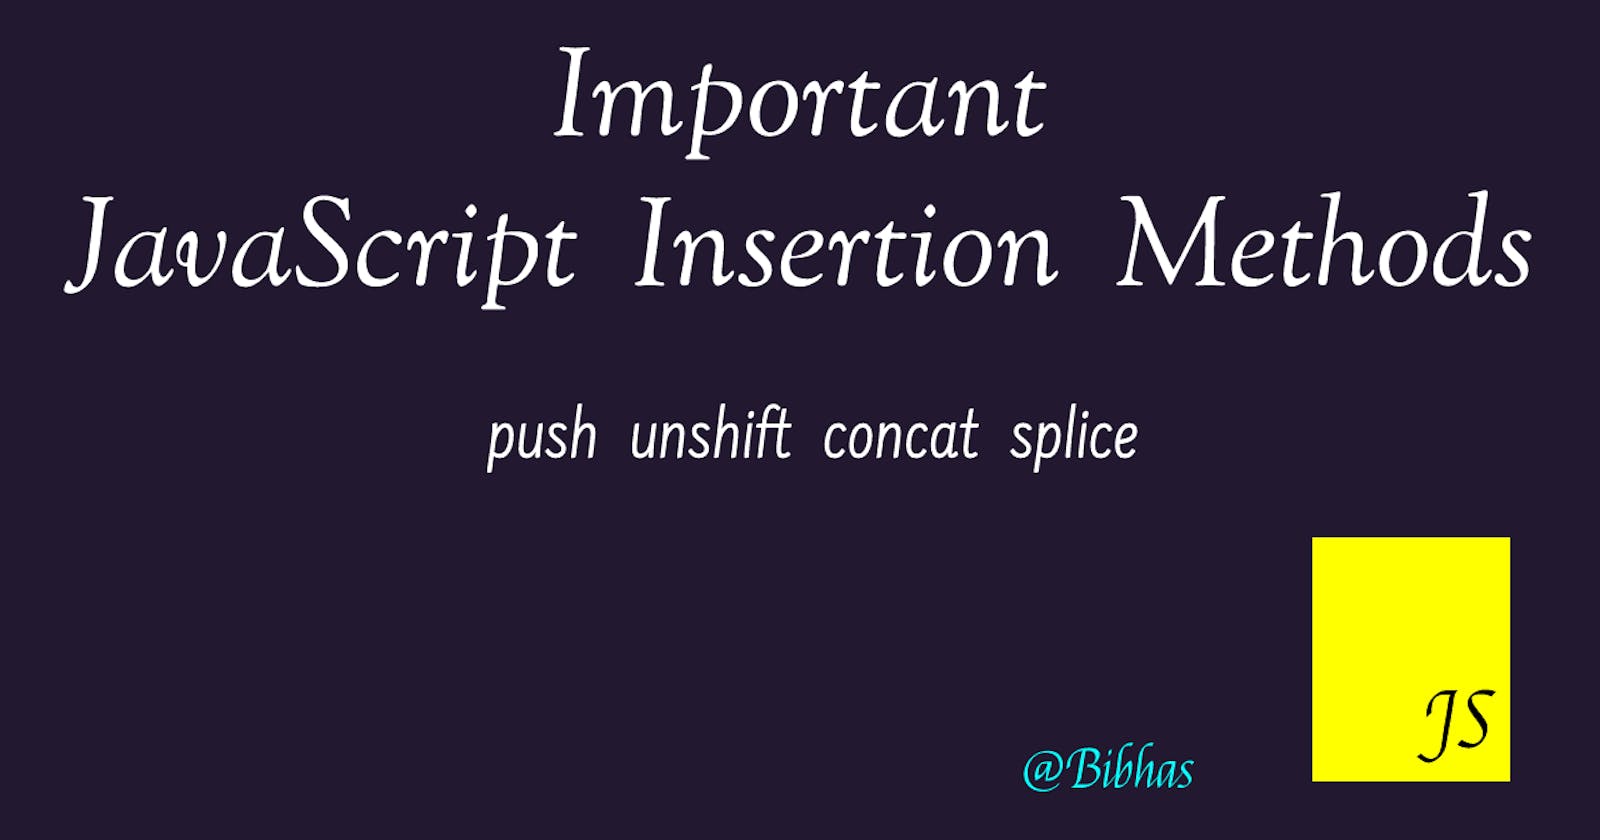 Add items in JavaScript Array: push(); unshift(); concat(); splice() methods